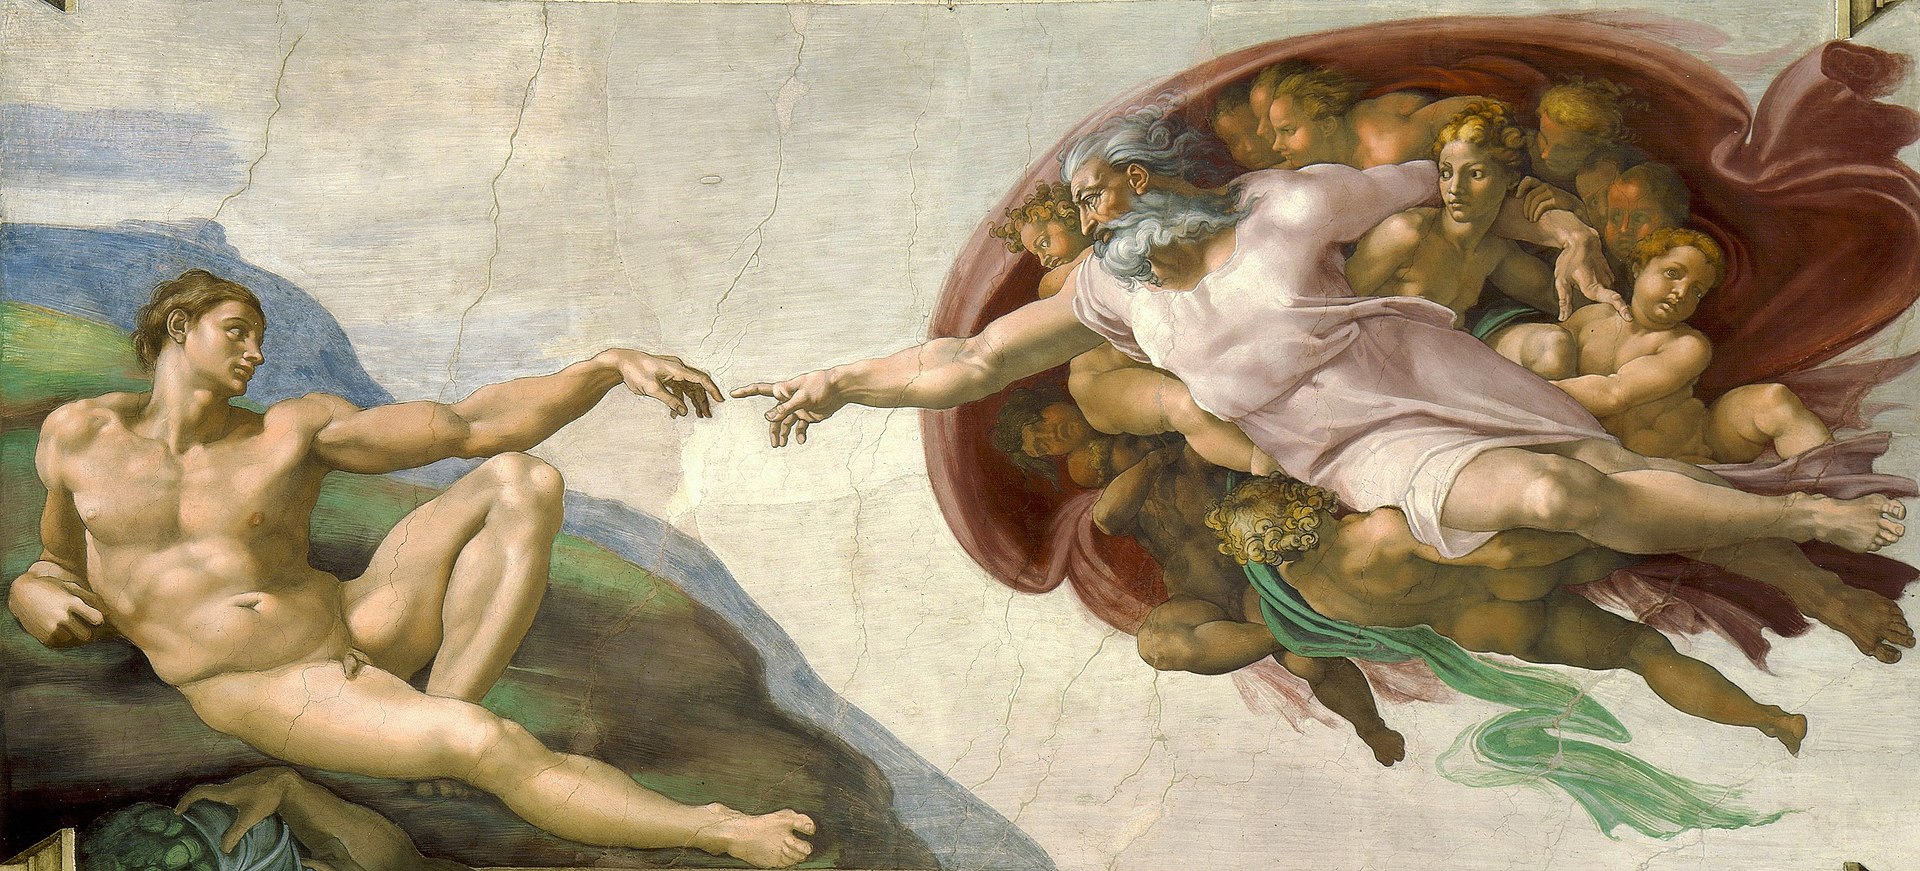 Michelangelo Creation of Adam painting